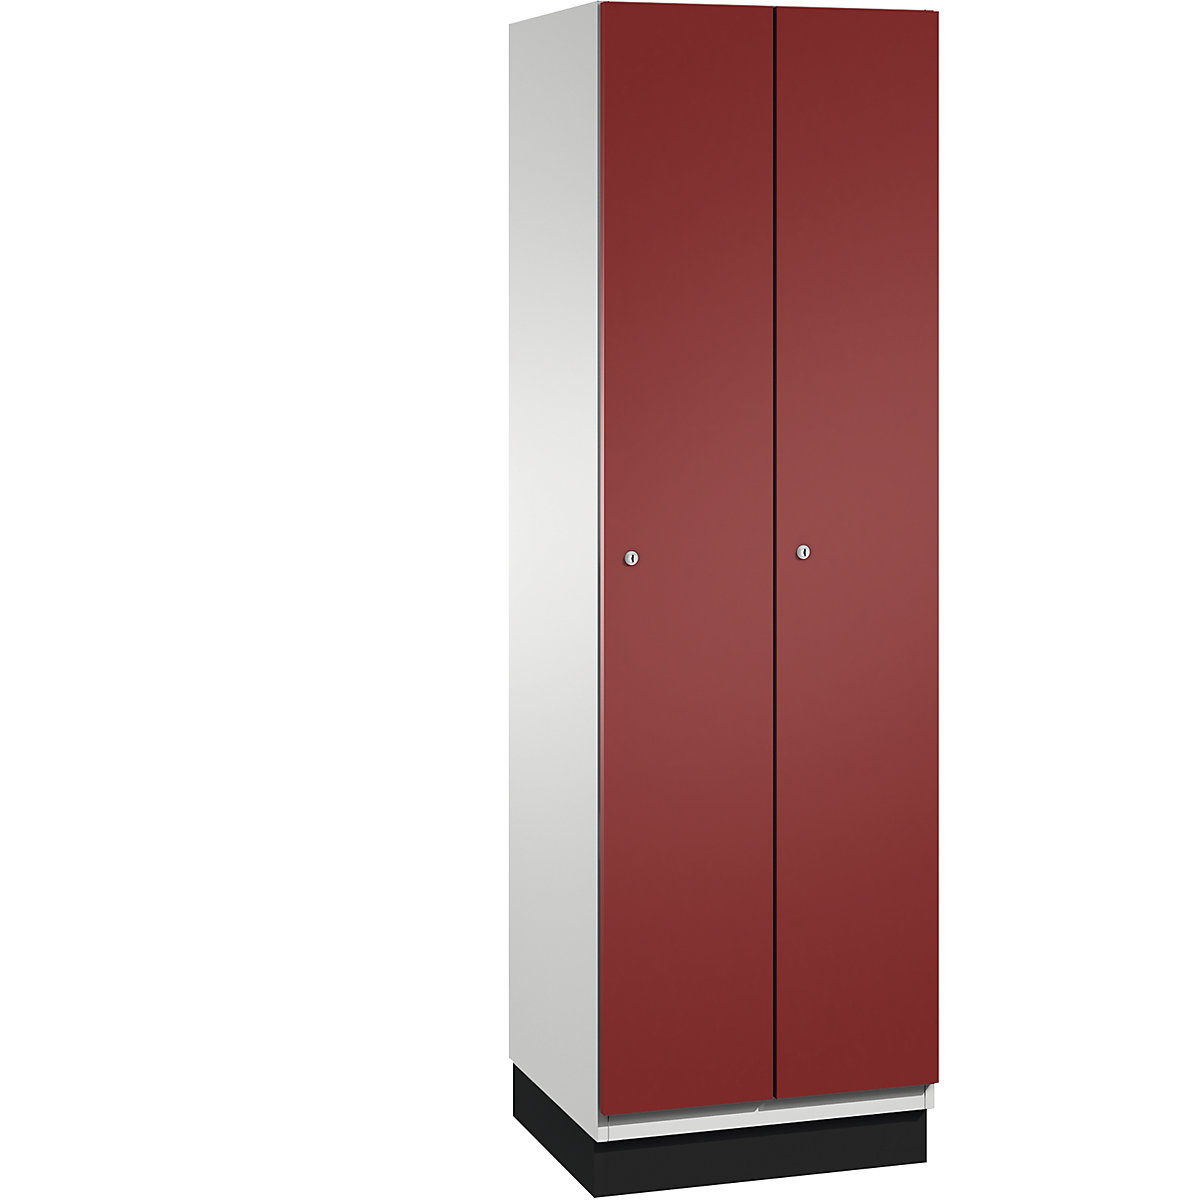 CAMBIO cloakroom locker with sheet steel doors – C+P, 2 compartments, 600 mm wide, body light grey / door ruby red-5